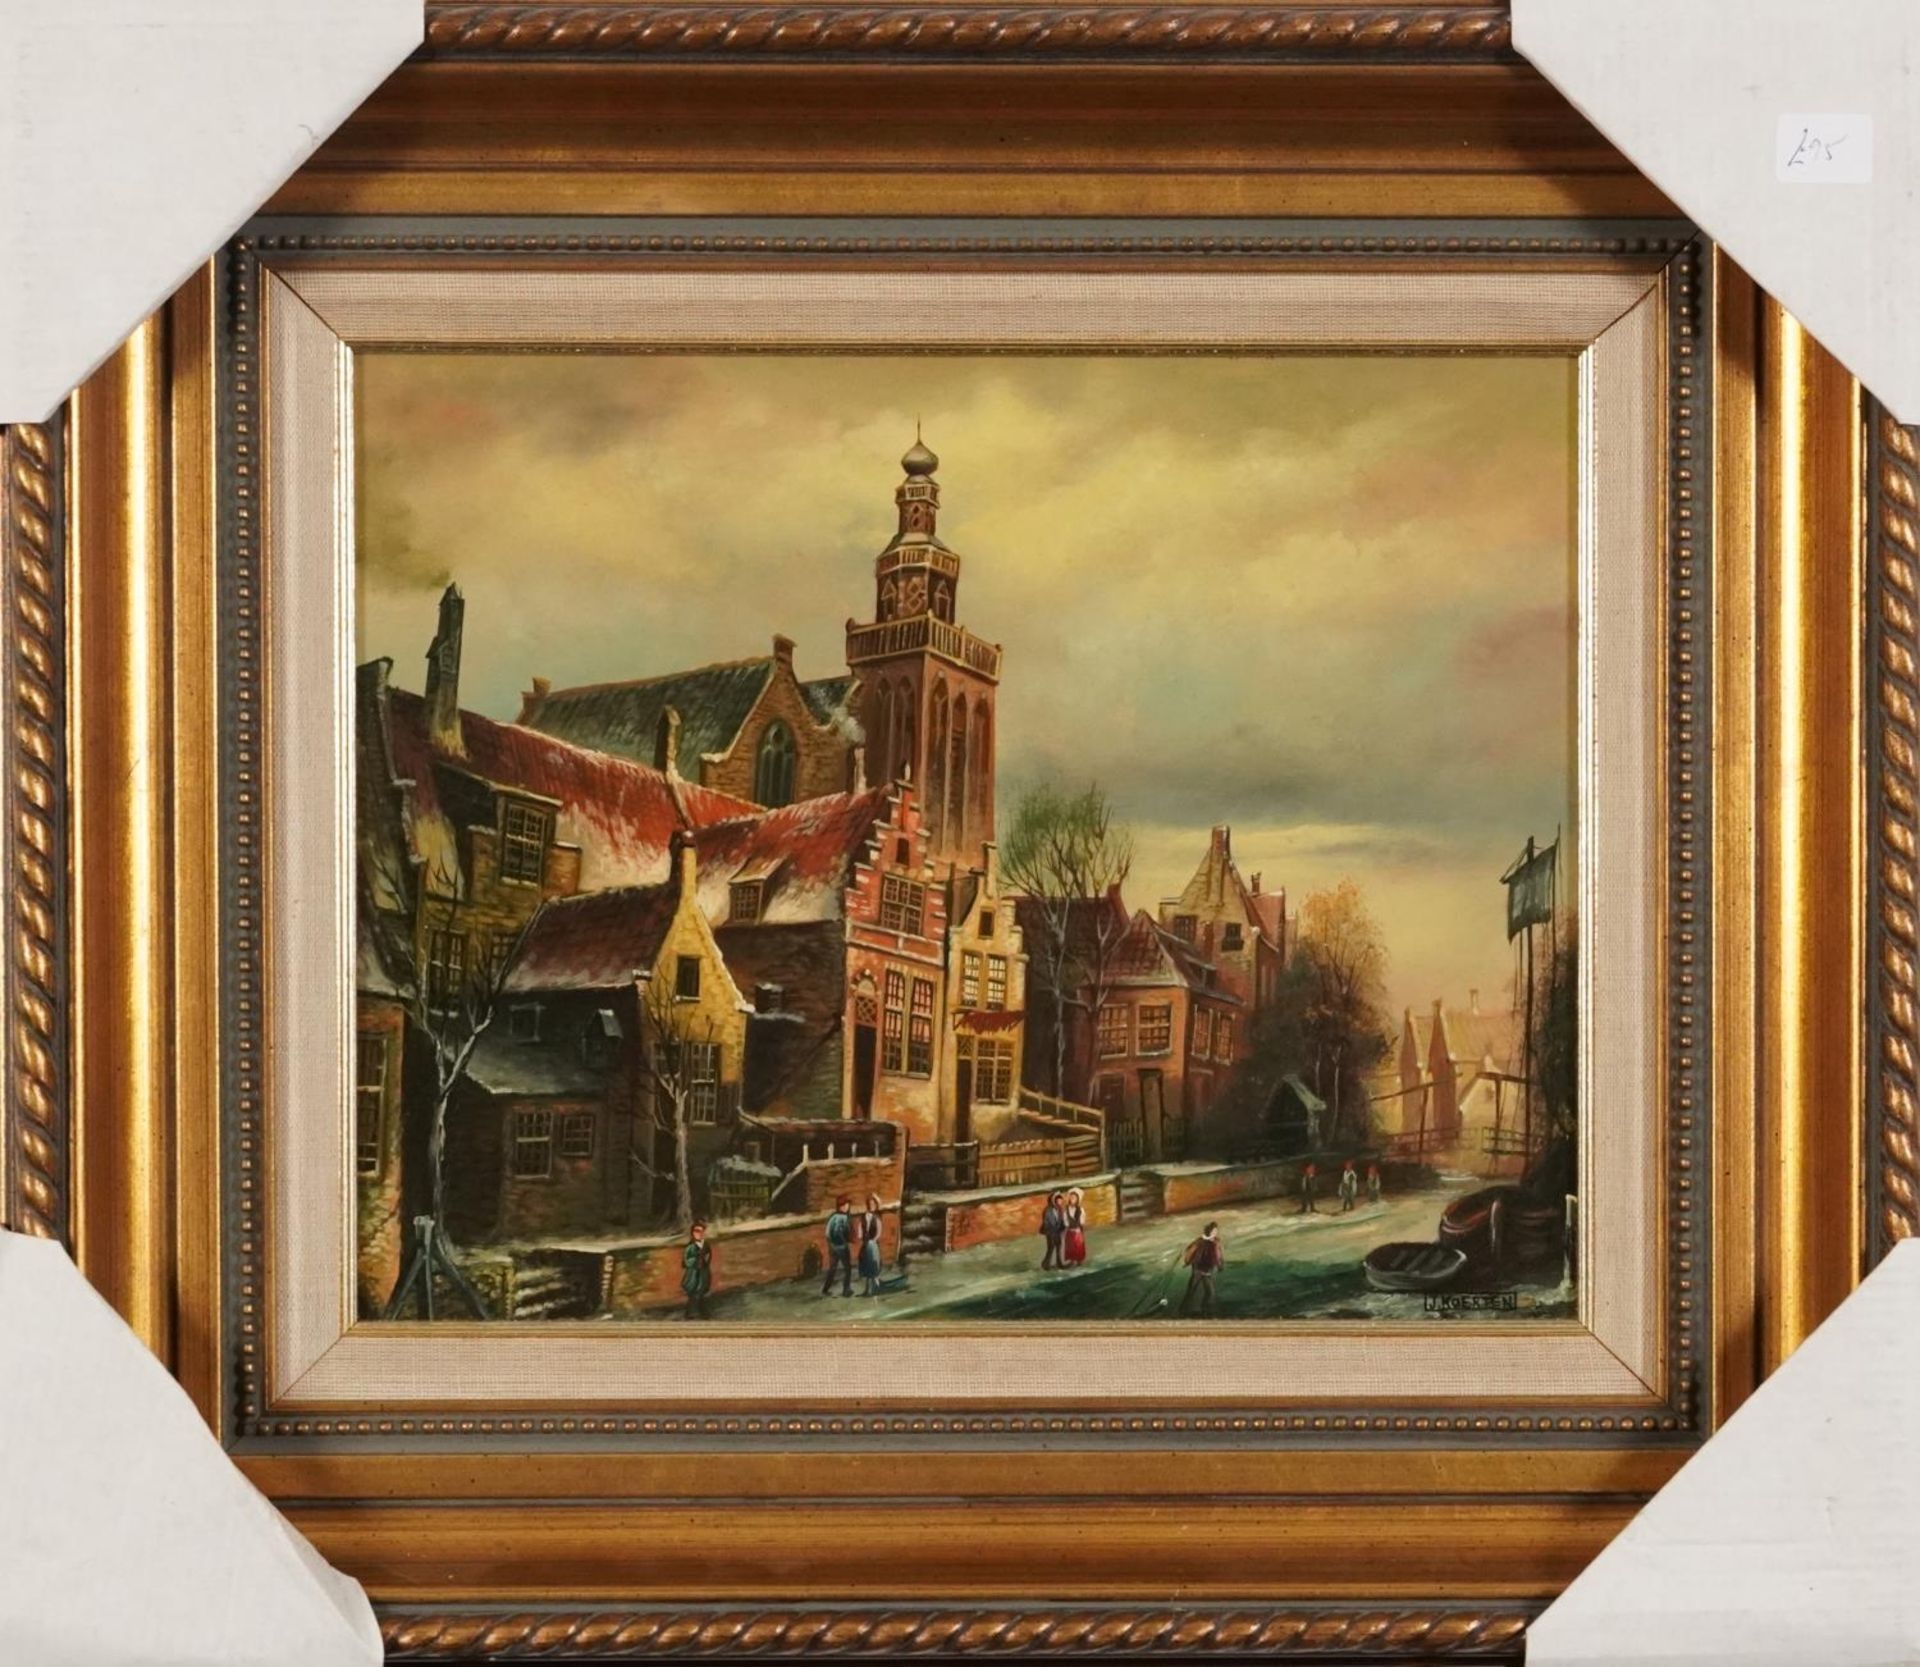 J Coerten - Winter street scene, Old Master style oil on wood panel, mounted and framed, 29cm x 23cm - Image 2 of 6